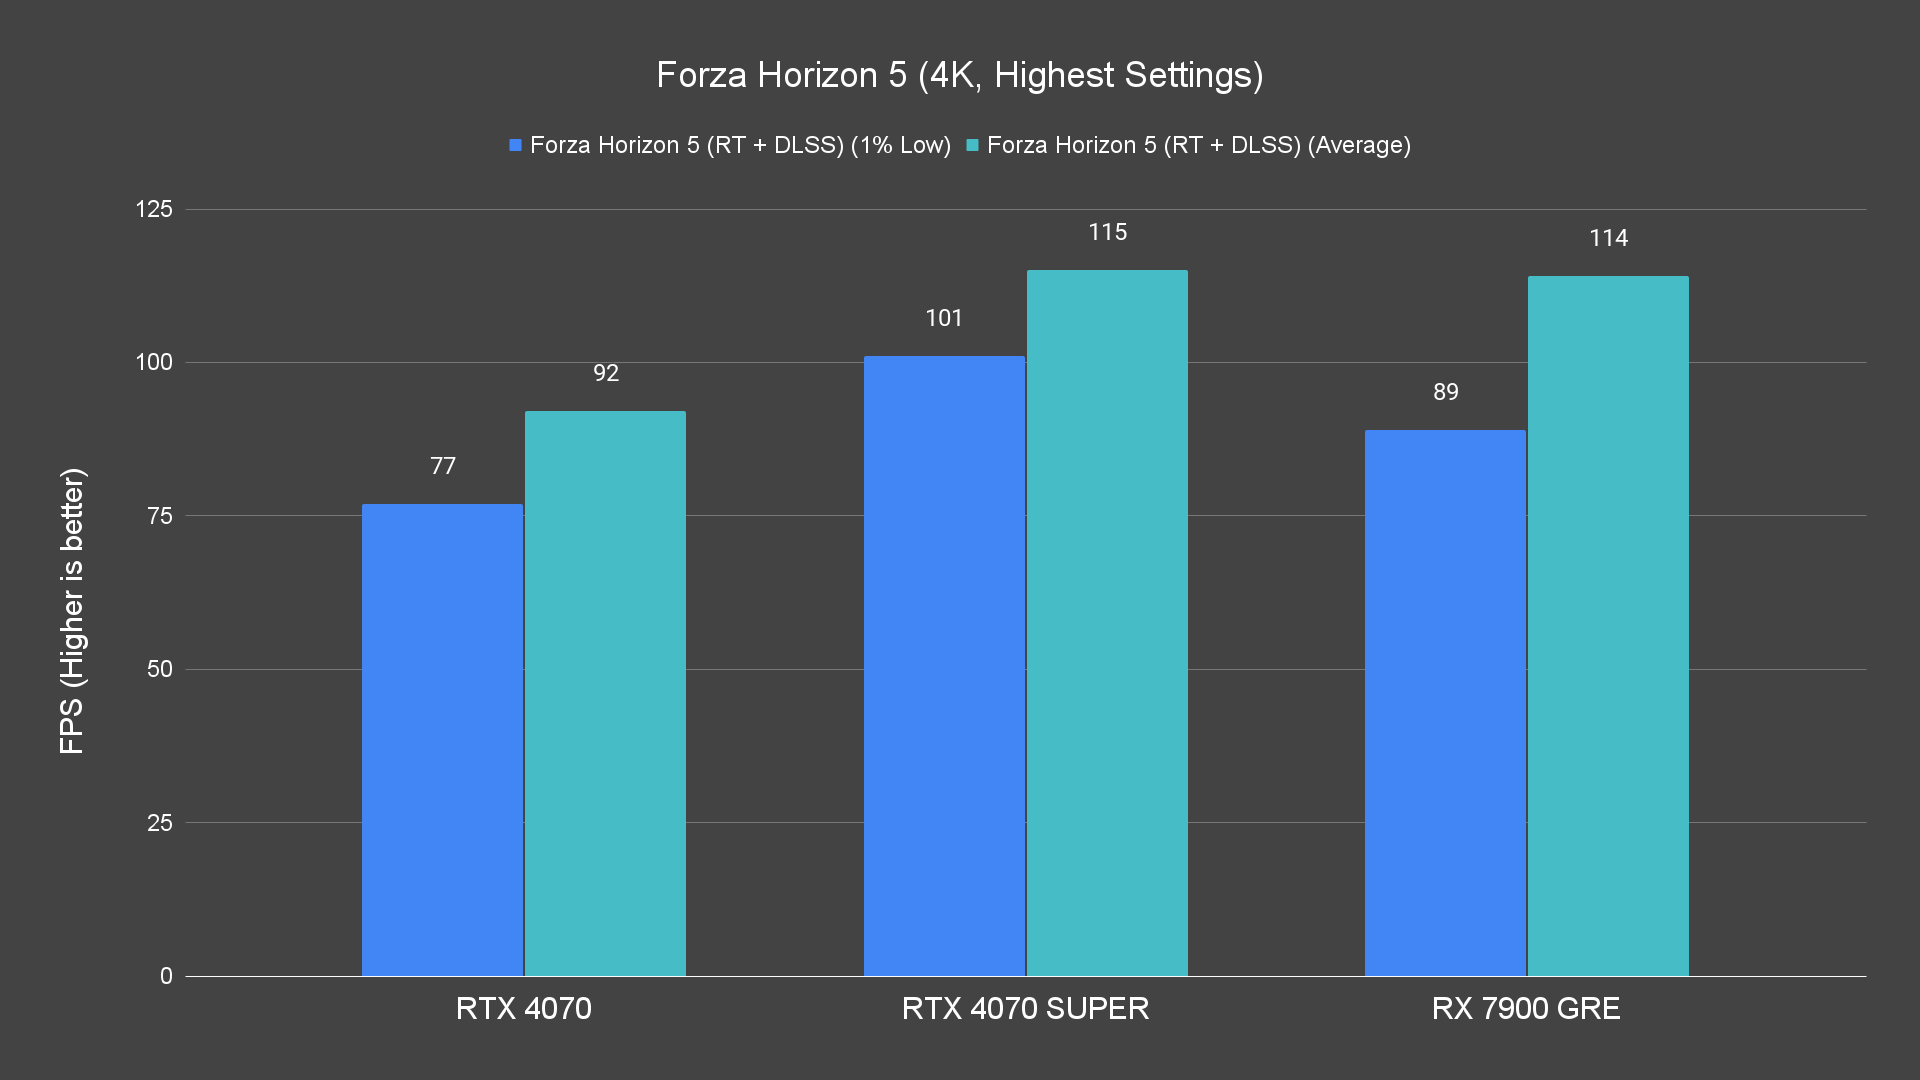 Forza Horizon 5 (4K, Highest Settings) RX 7900 GRE